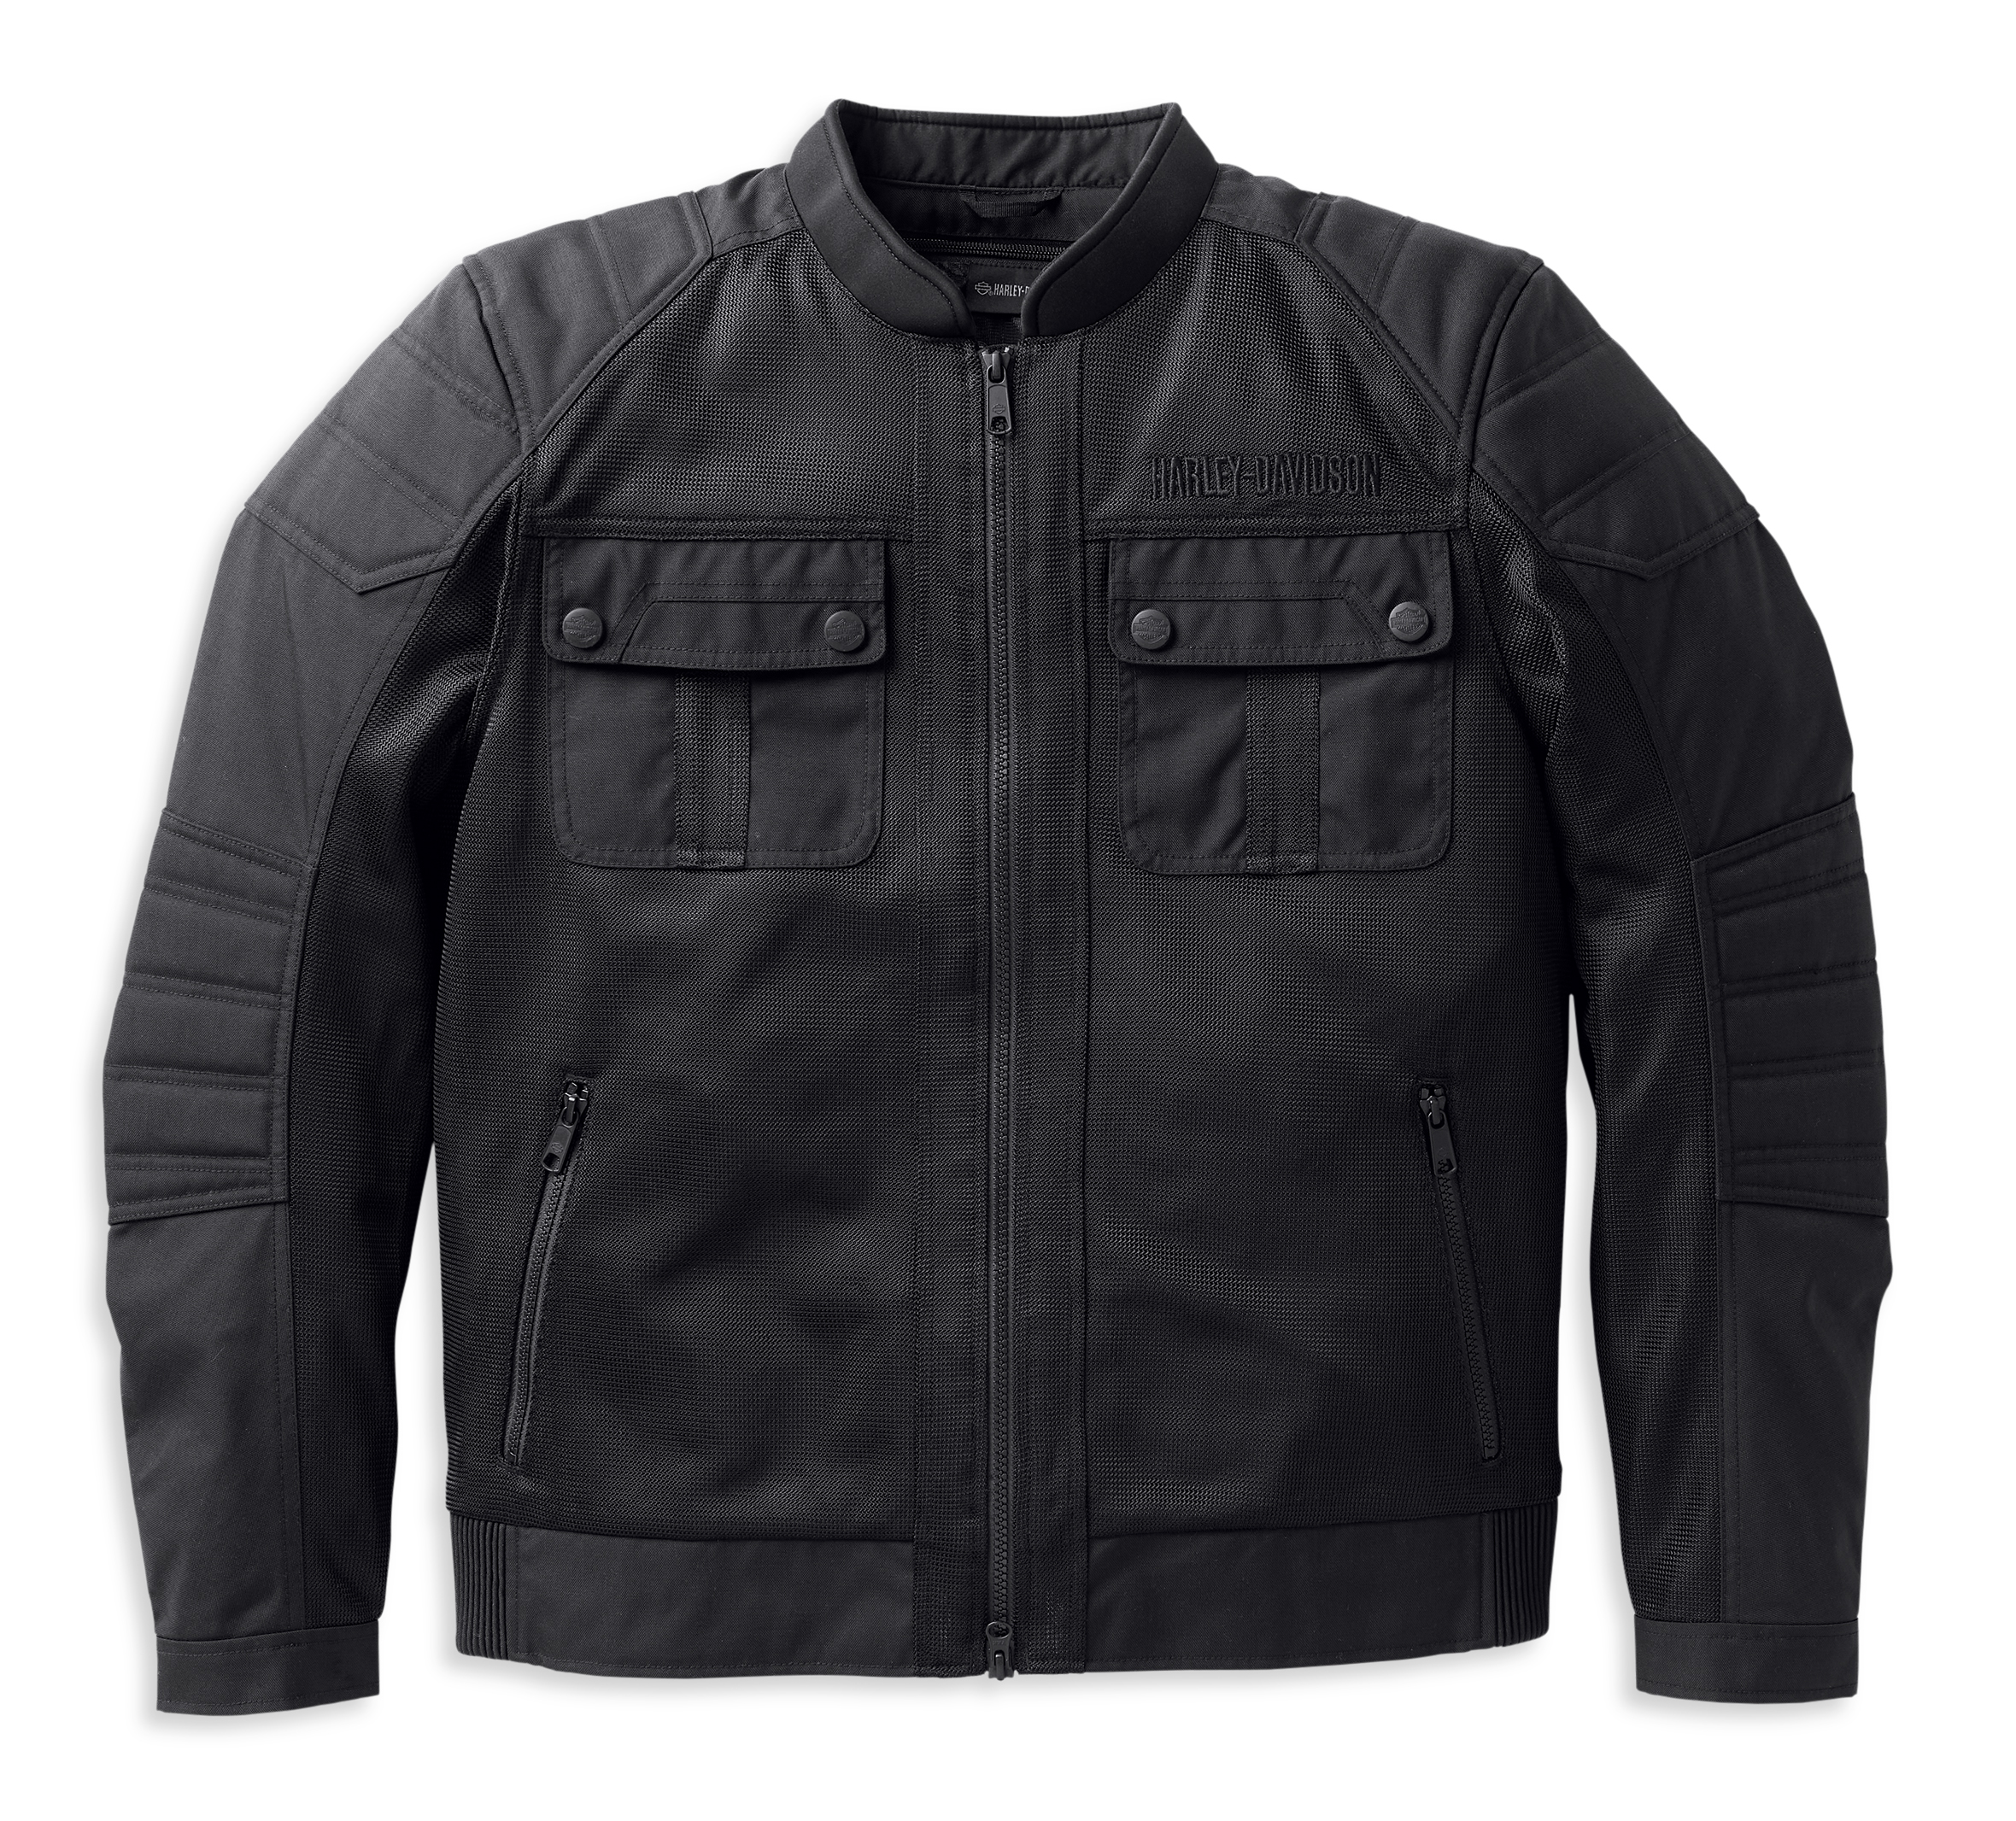 Harley Davidson hoodie zip up jacket insert Size Large blog.knak.jp